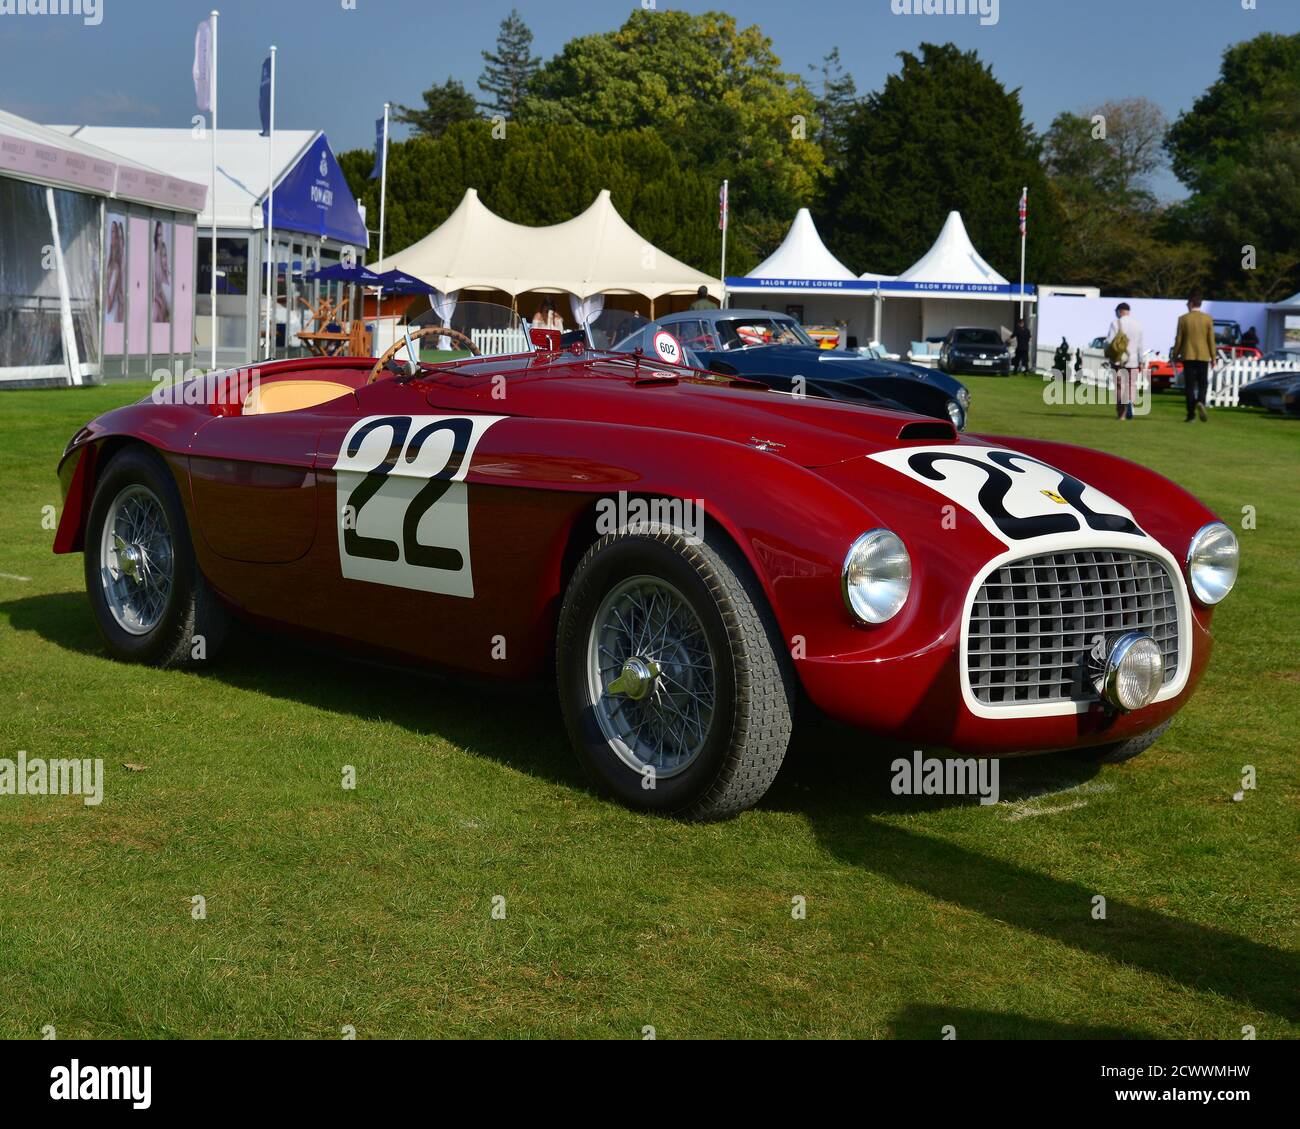 Ferrari 166 MM Barchetta, Salon Privé, Blenheim Palace, Woodstock, Oxfordshire, England, September 2020. Stock Photo